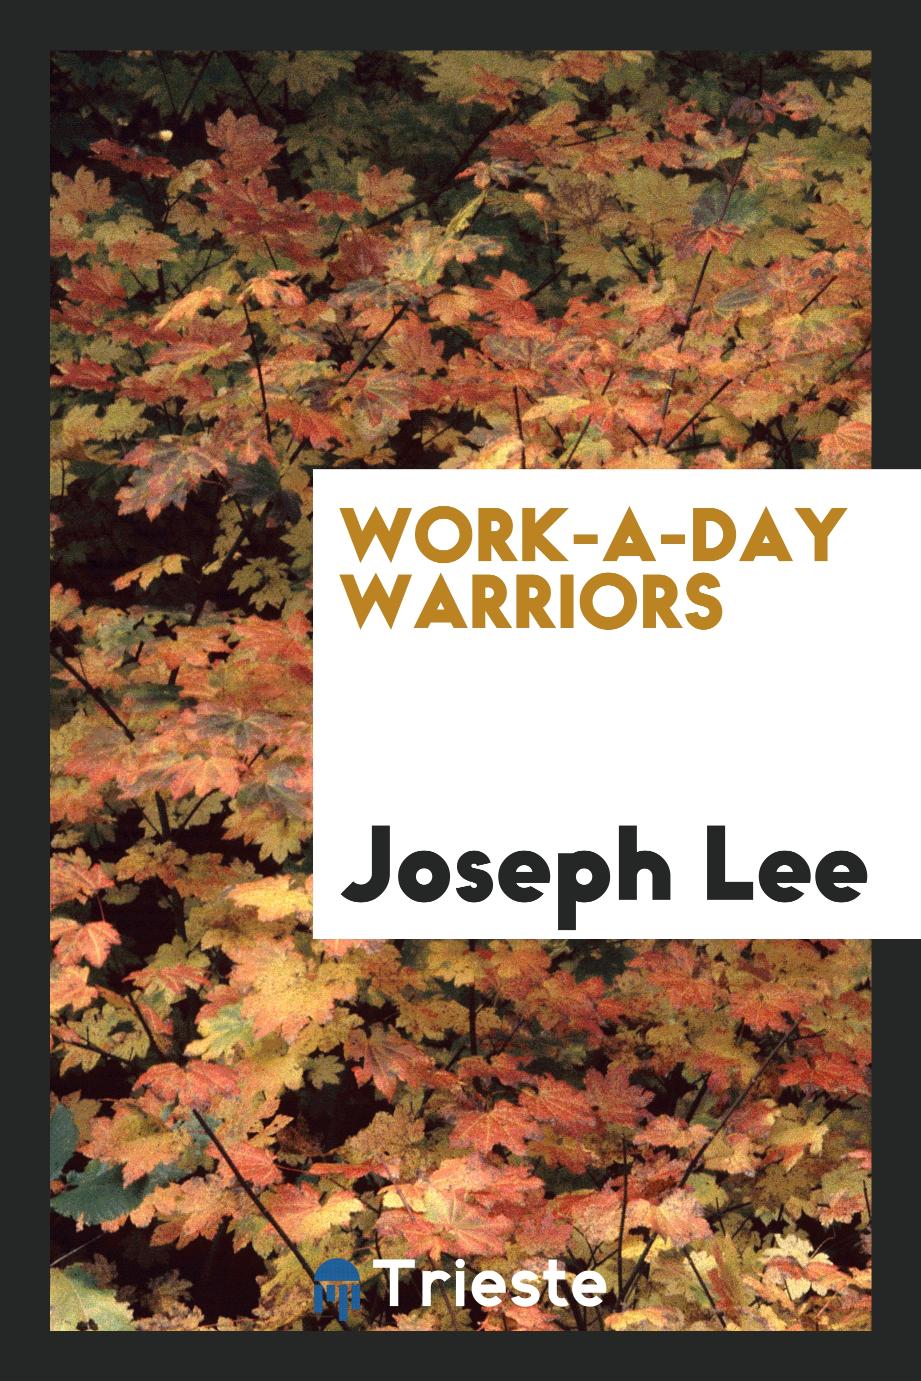 Work-a-day warriors